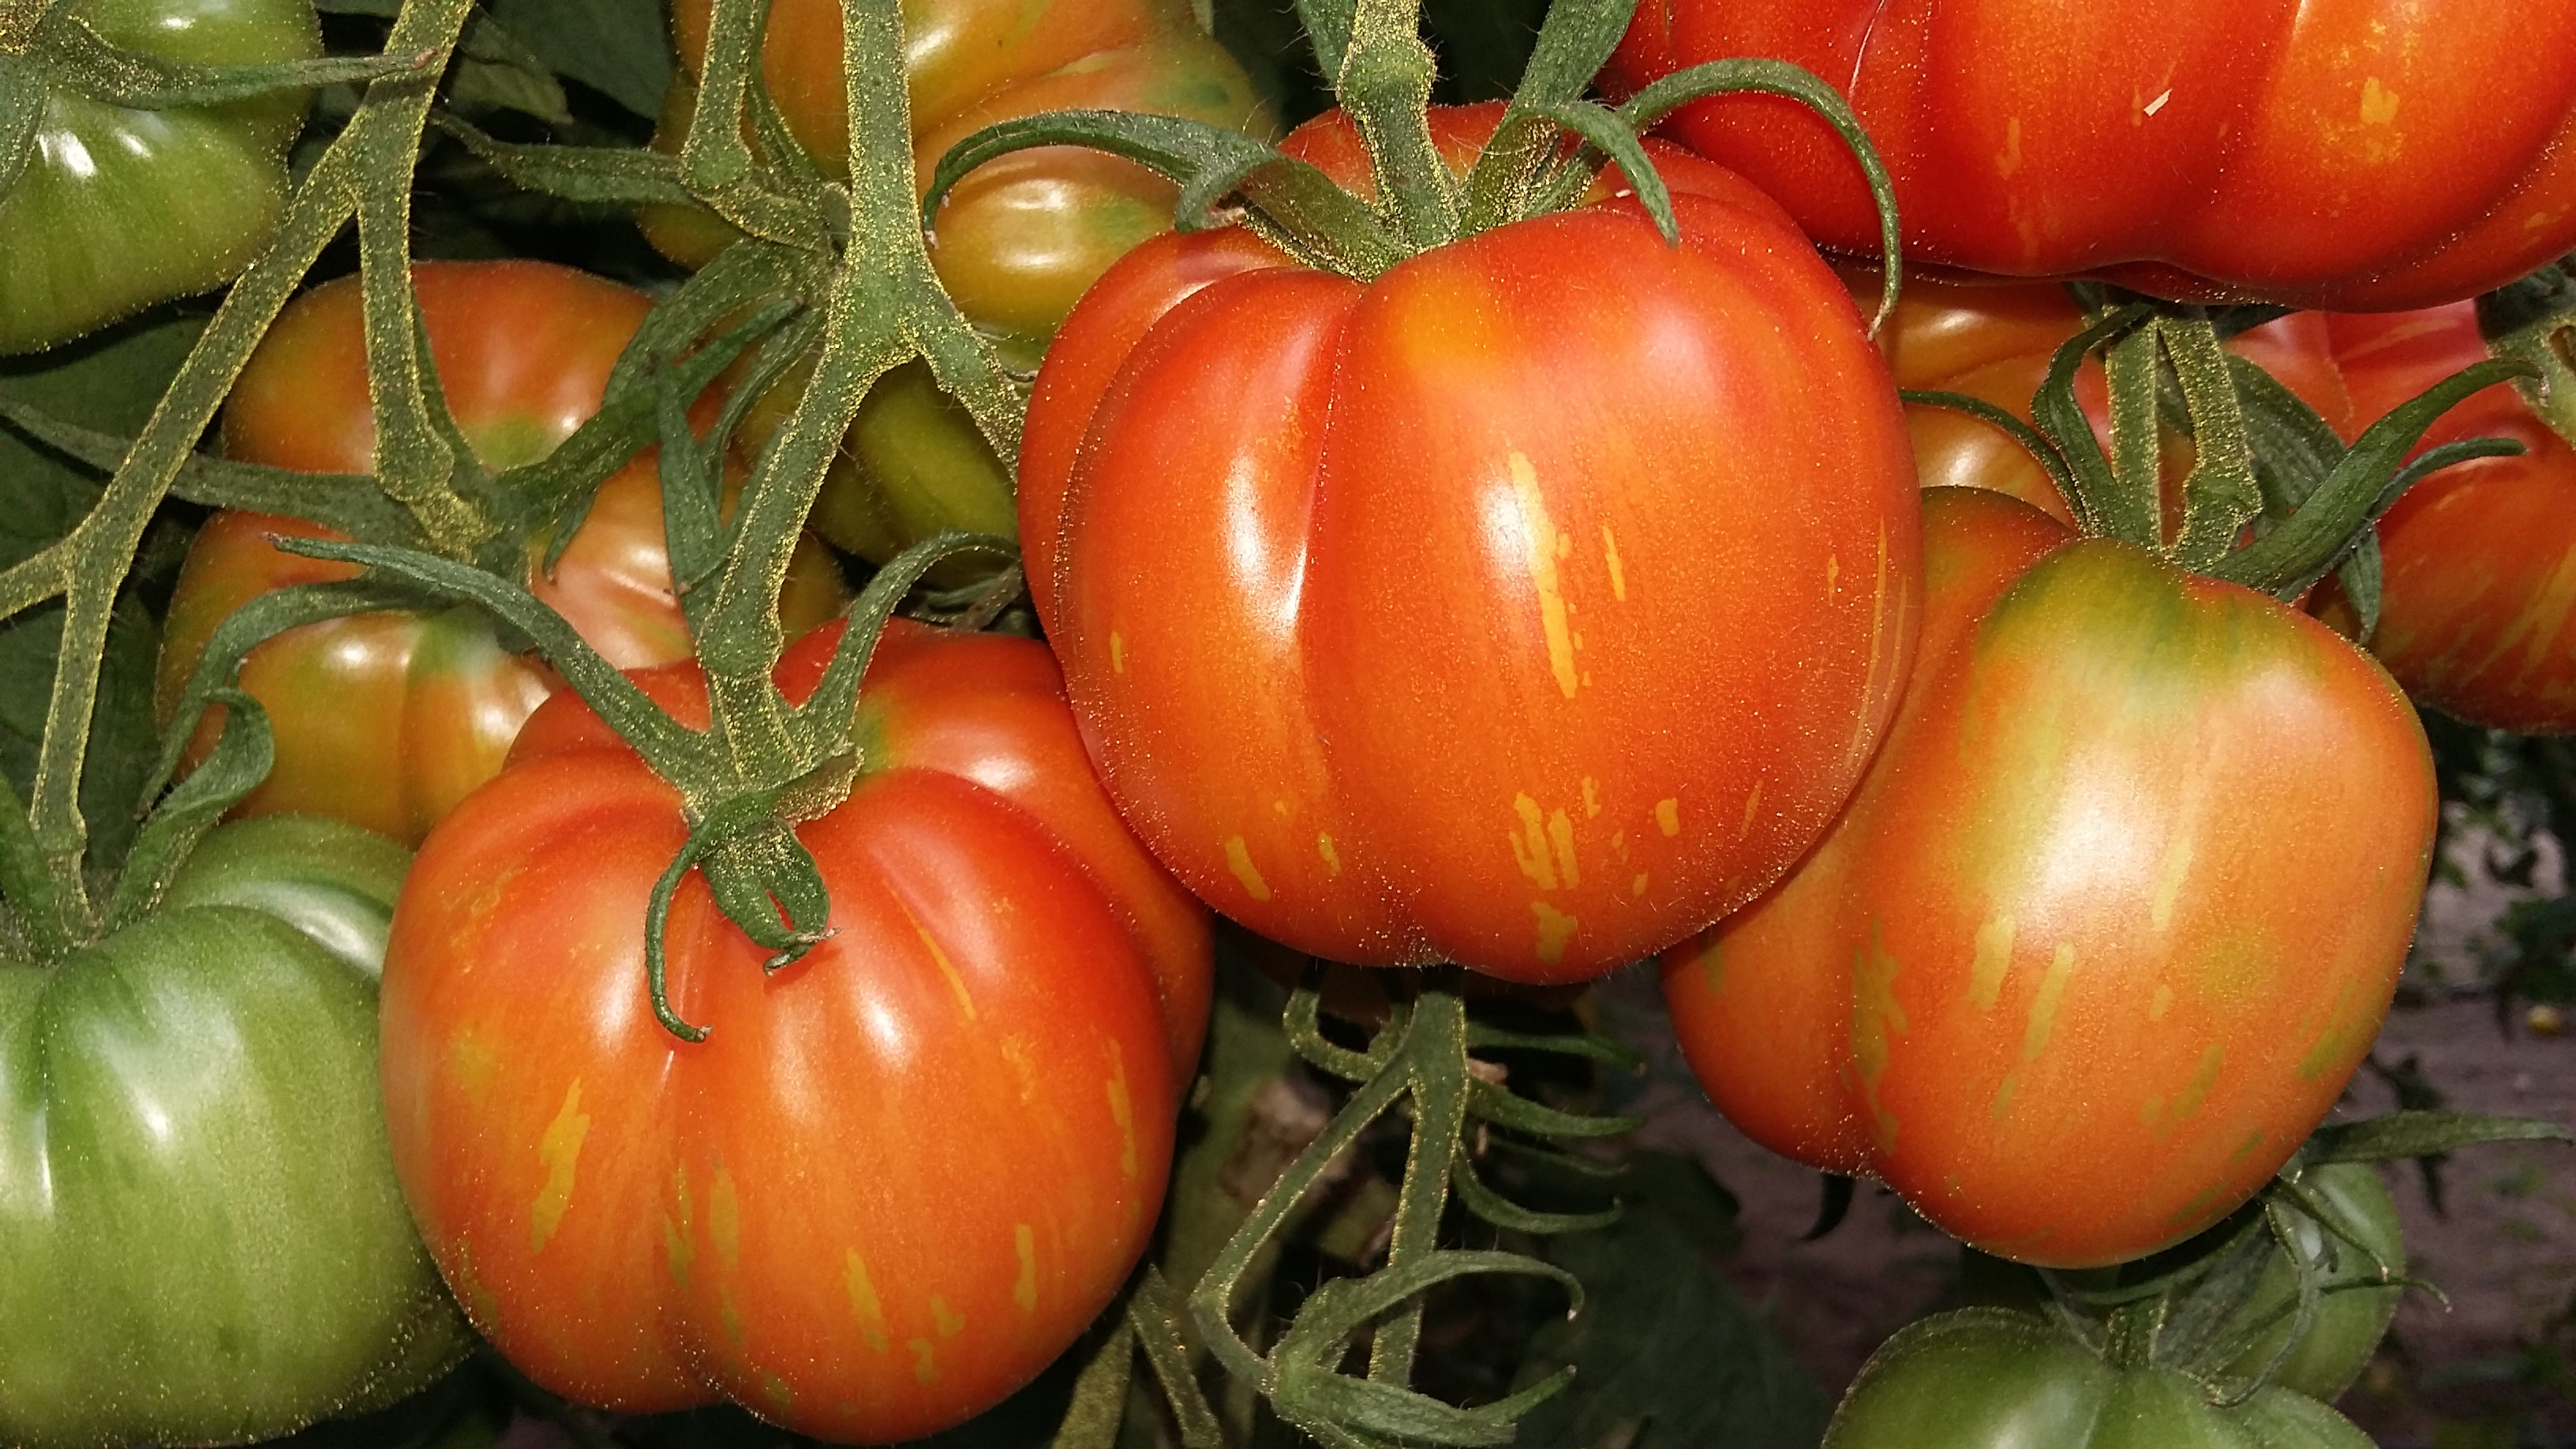 Salattomate rotgelb gestreifte Paprikaförmige (3798) | Tomaten ...